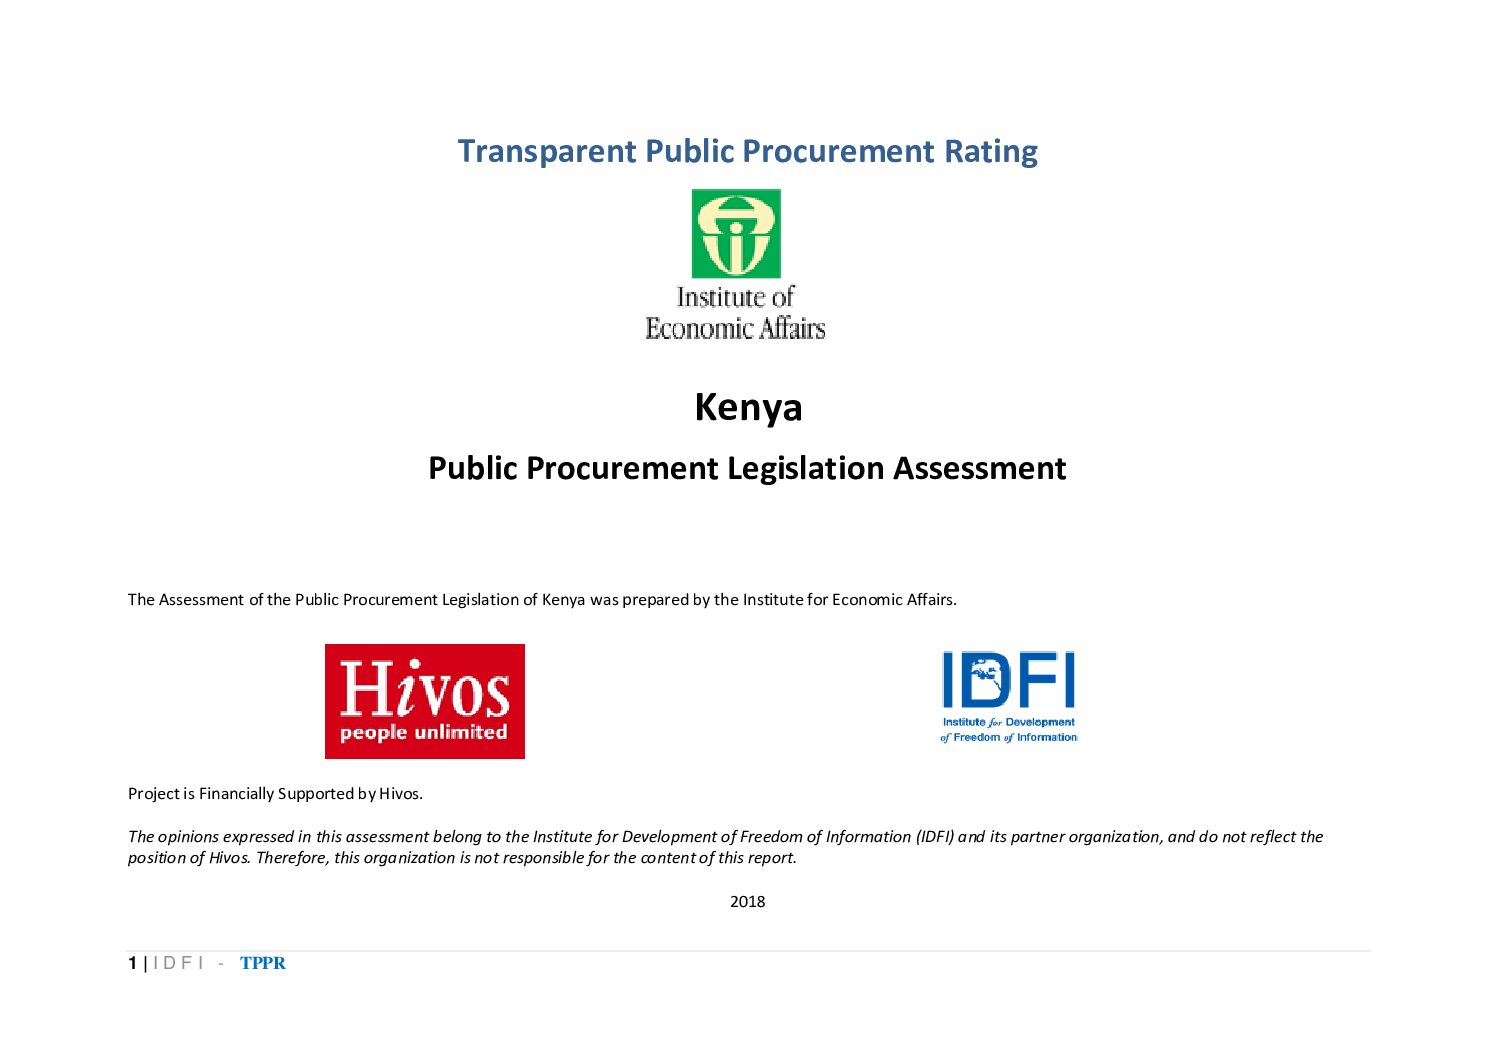 Public Procurement Legislation Assessment – Kenya